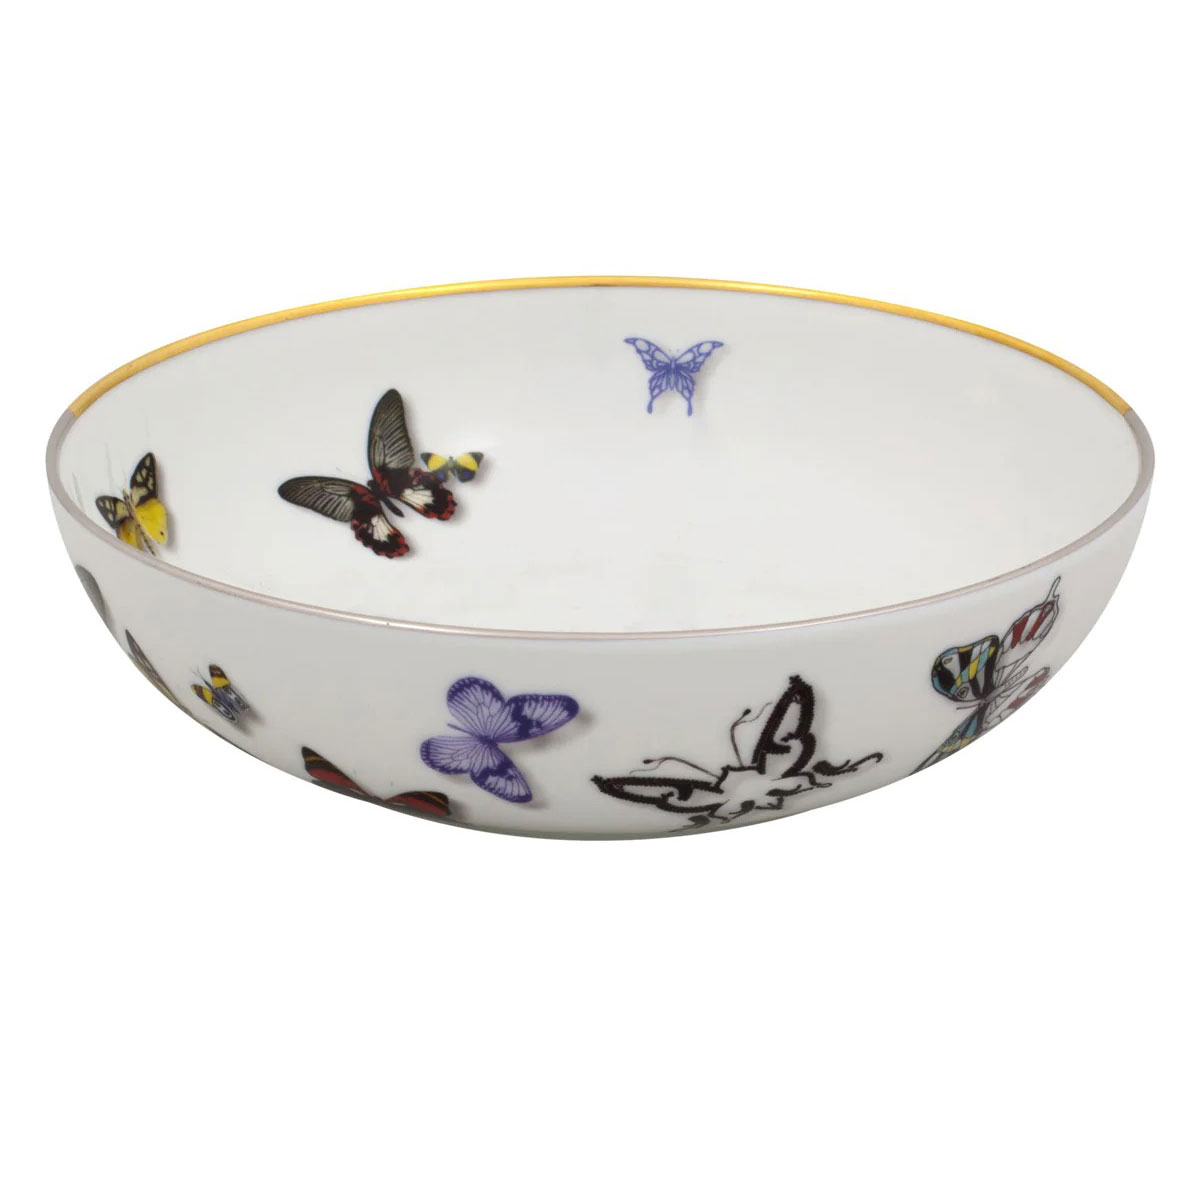 Vista Alegre Porcelain Christian Lacroix - Butterfly Parade Cereal Bowl